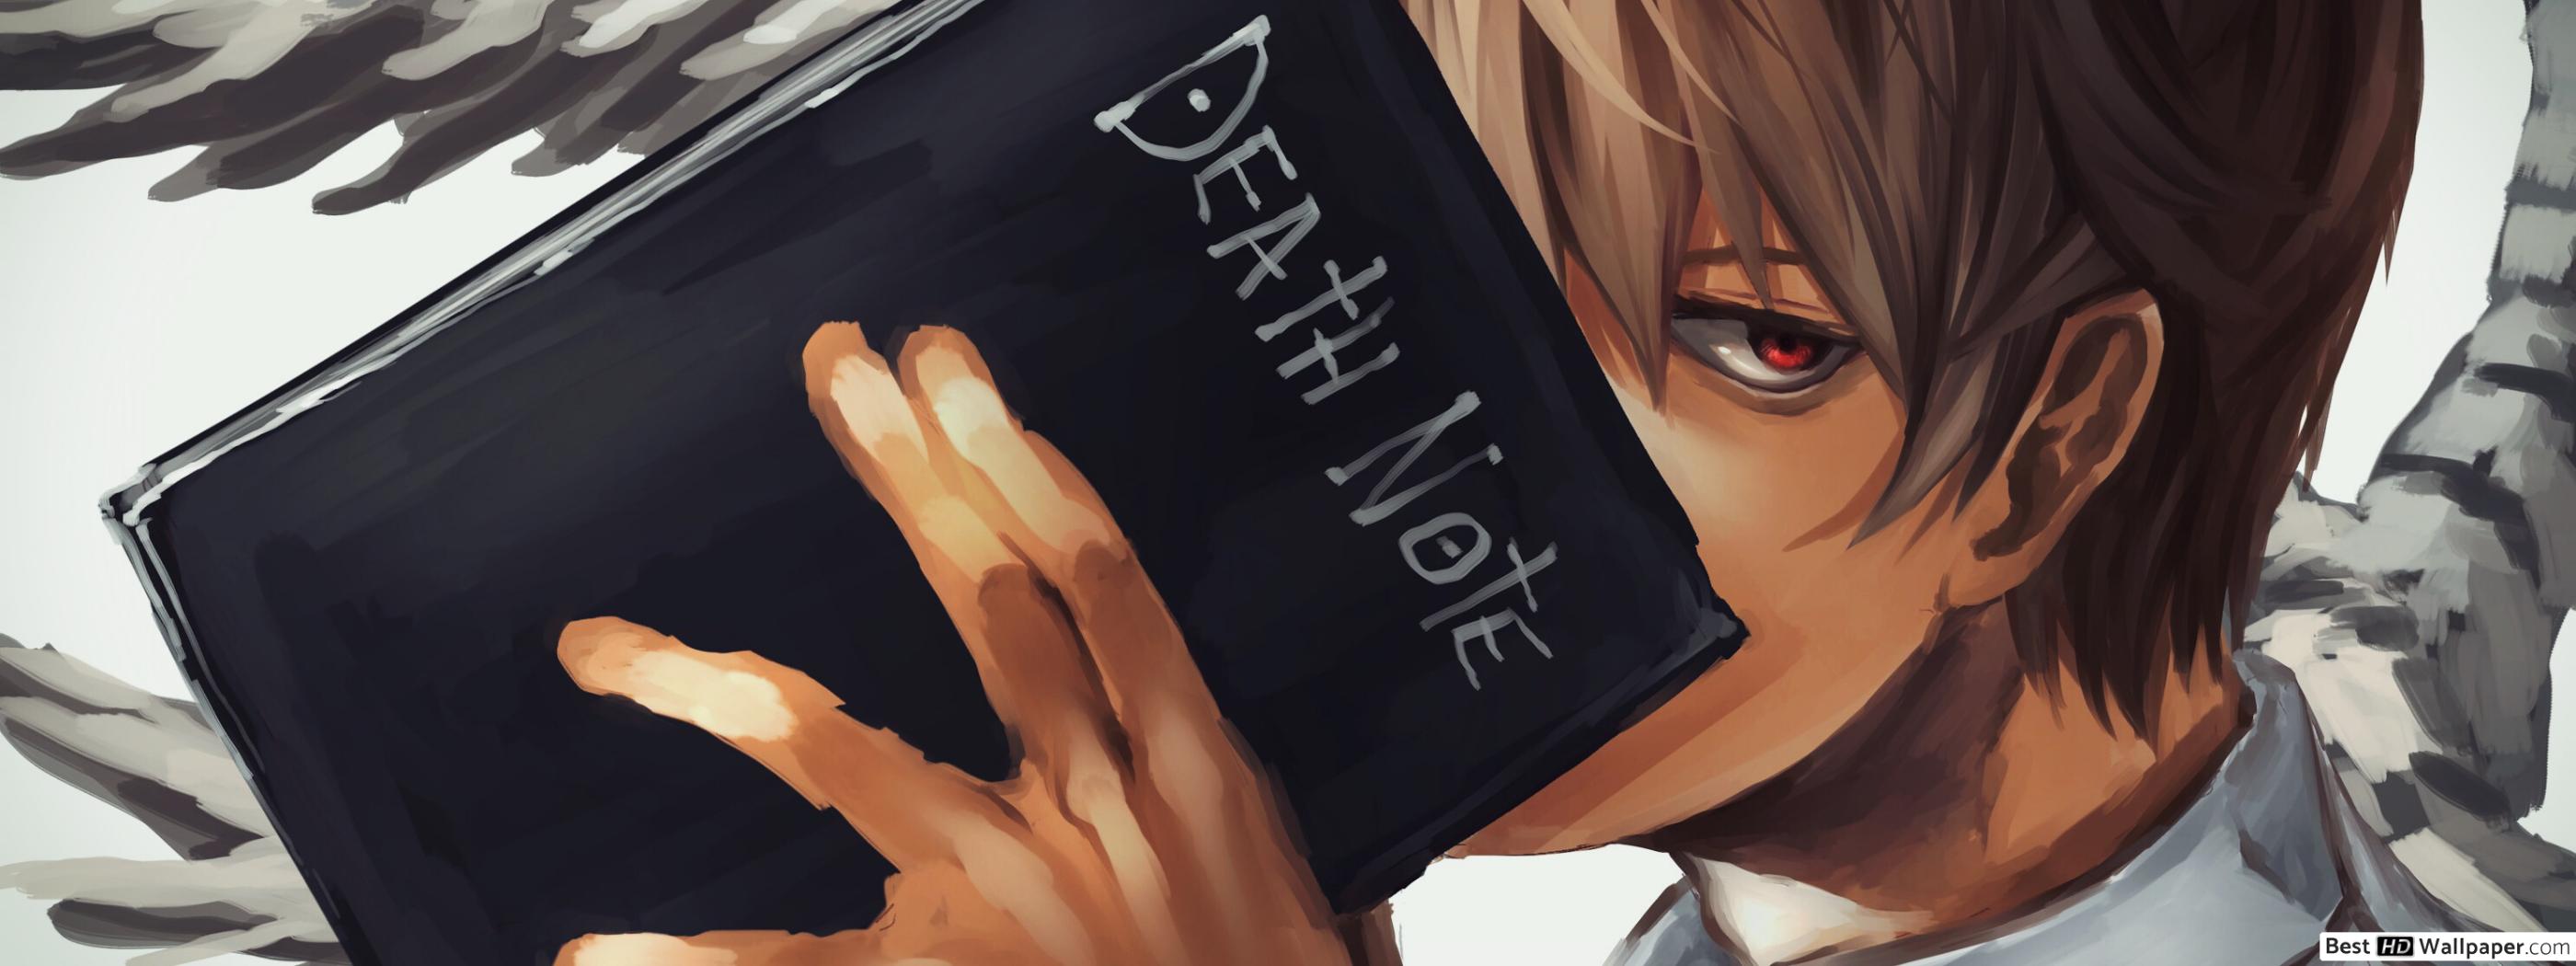 Death Note Yagami HD wallpaper download